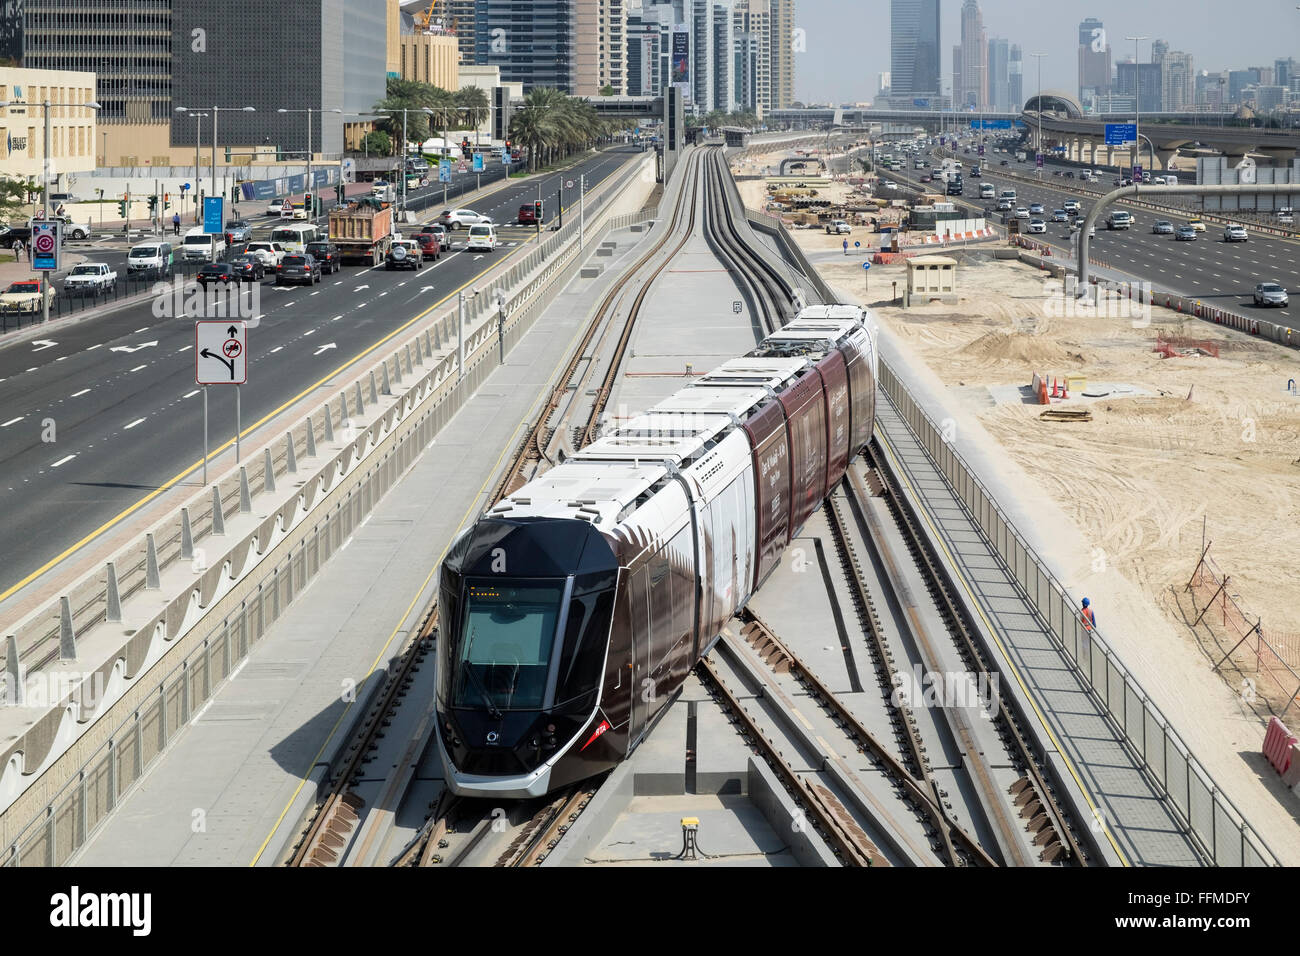 View of Dubai Tram system in United Arab Emirates Stock Photo